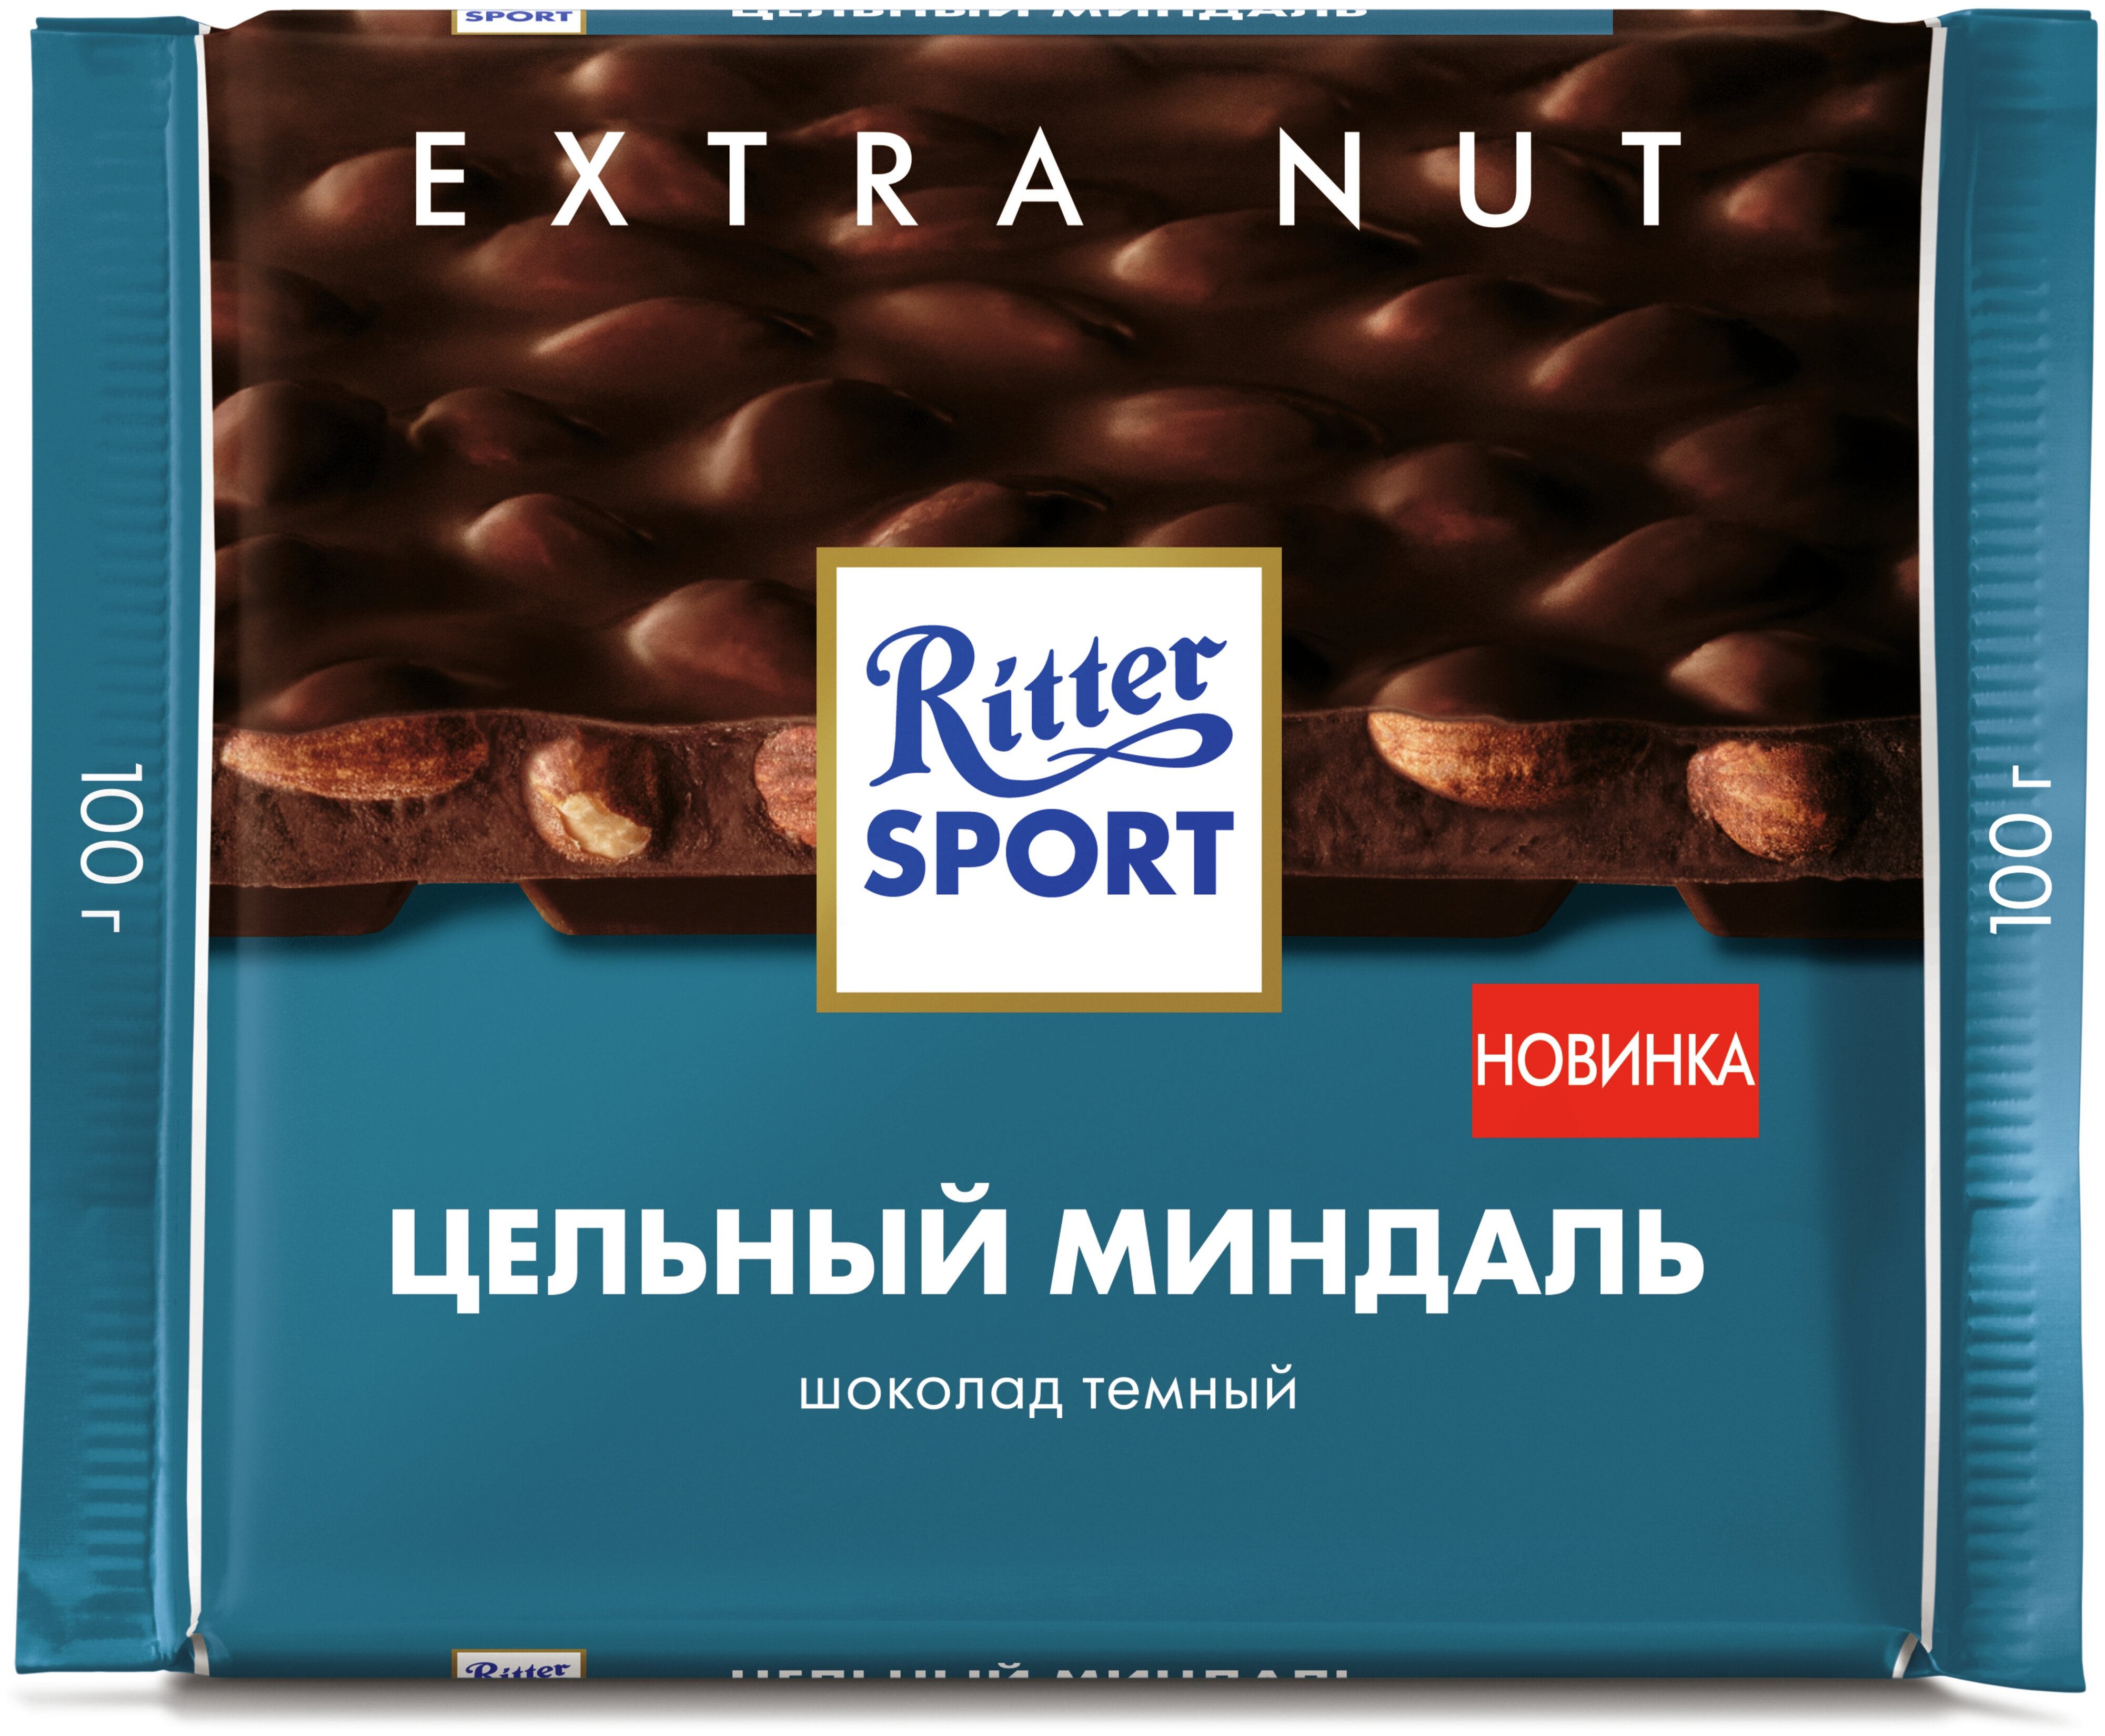 Фото Ritter Sport/Риттер спорт "Шоколад тёмный" Цельный миндаль в интернет-магазине axdv.ru / аиксдв